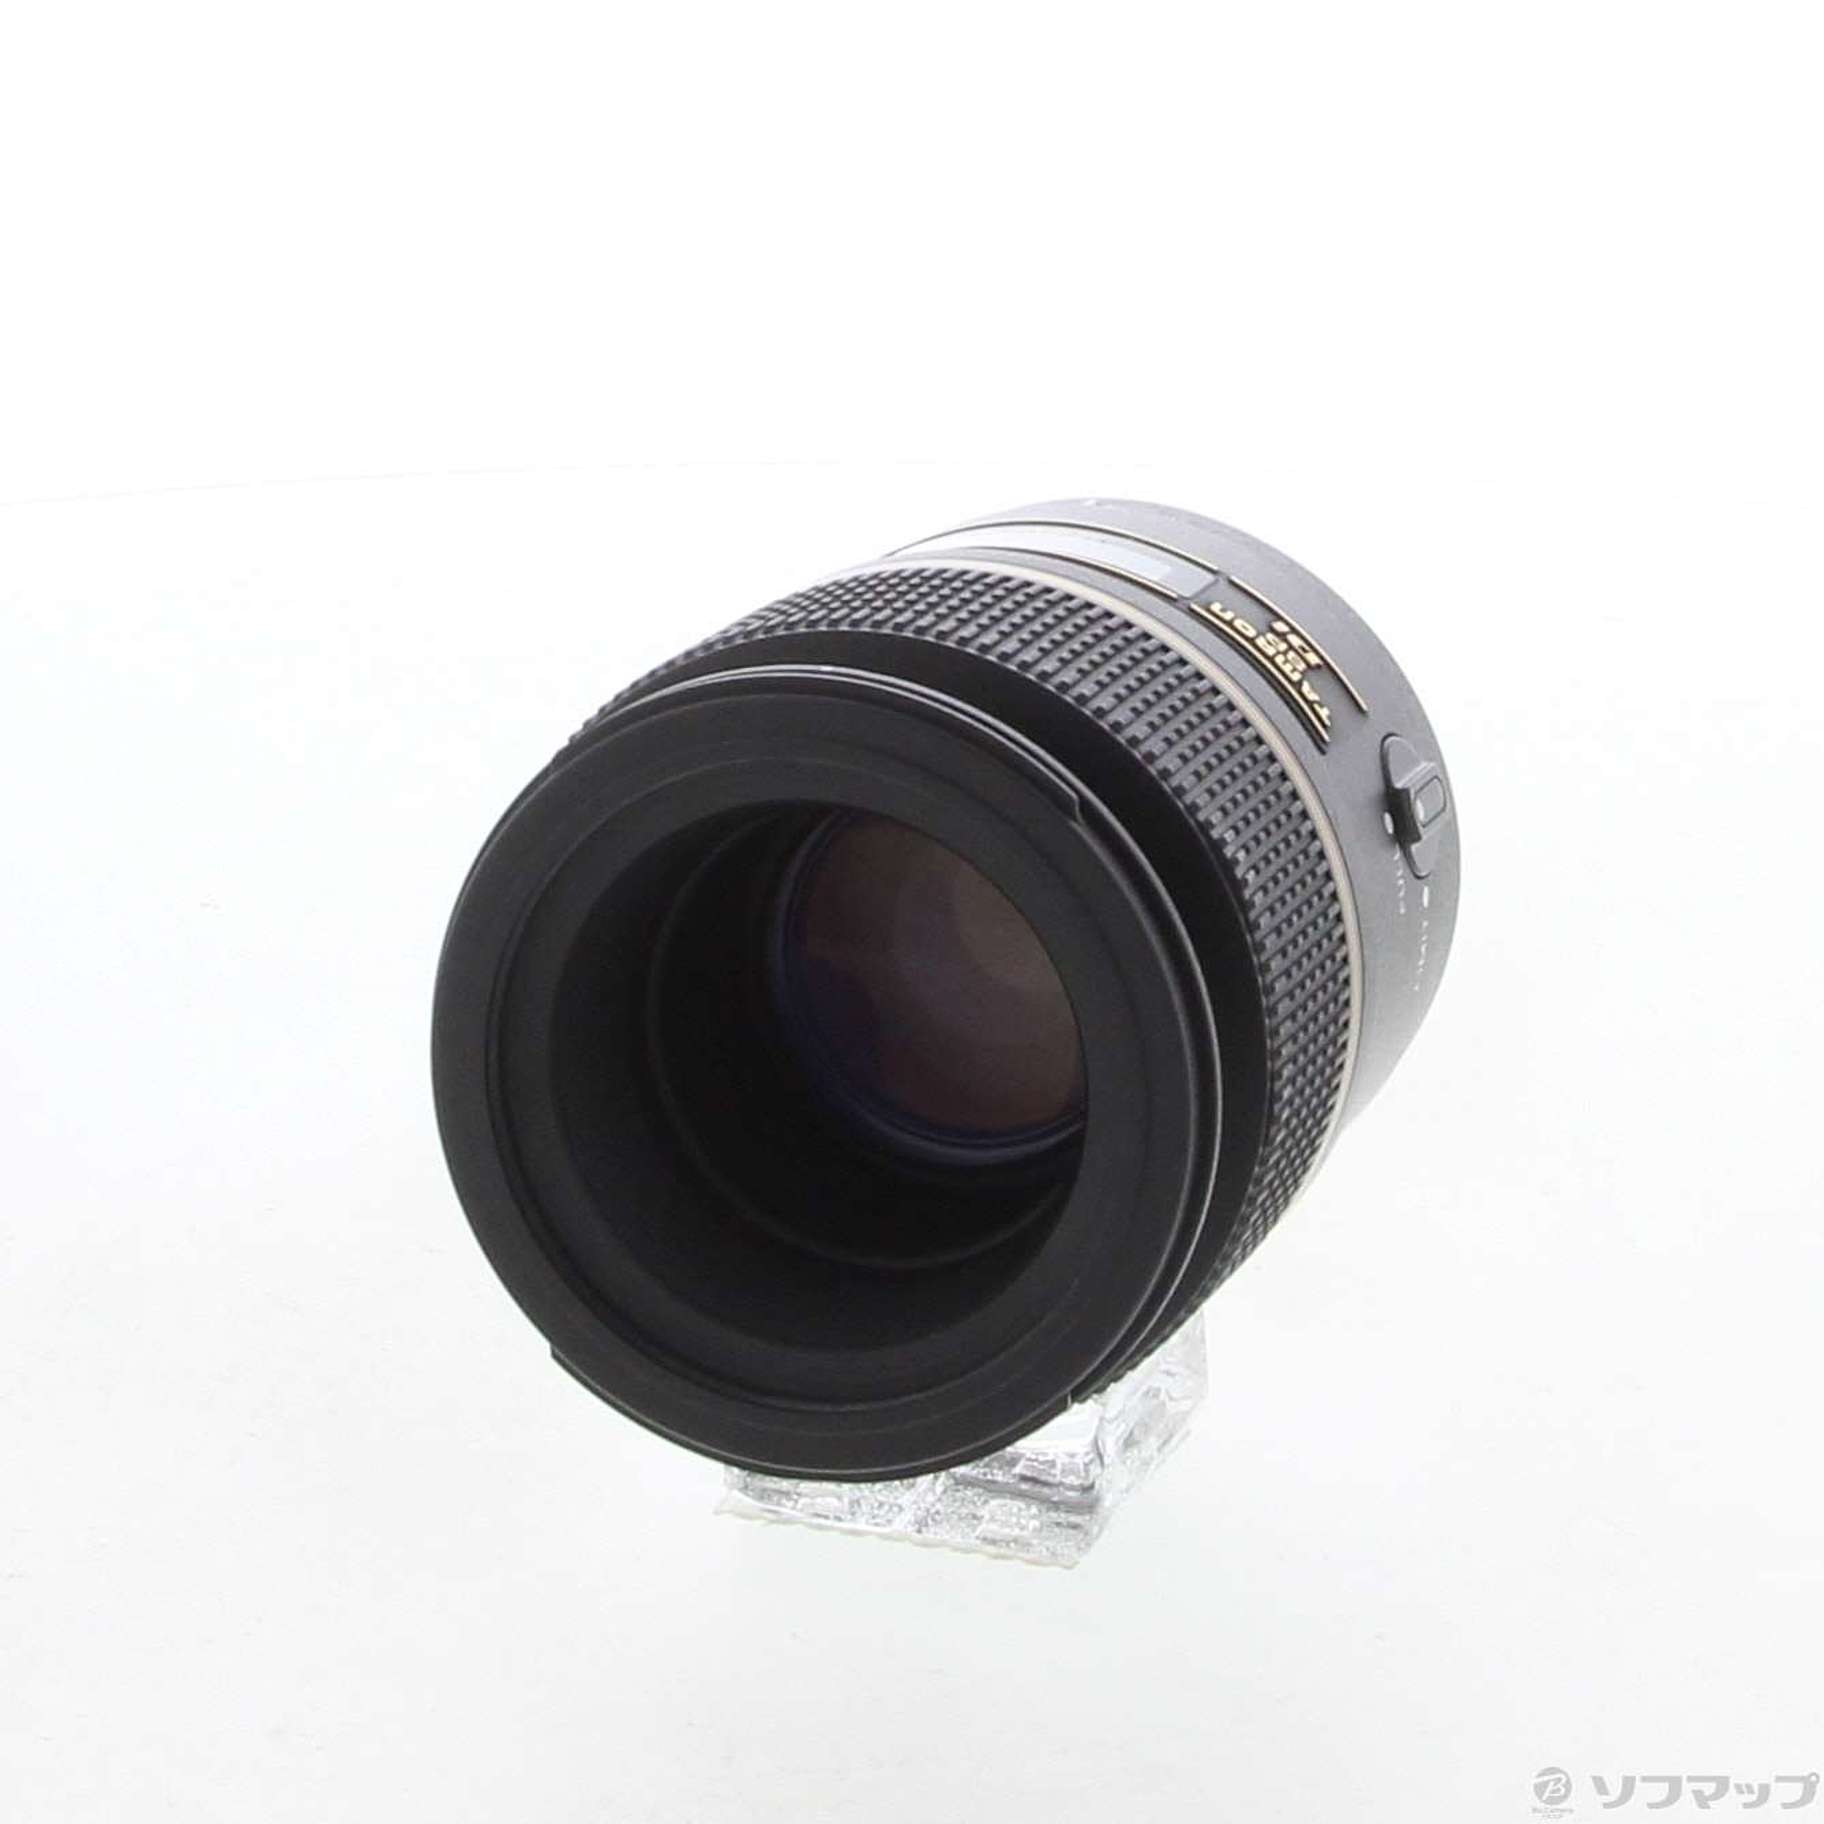 中古】TAMRON SP AF 90mm F2.8 Di MACRO (272EN) (Nikon用